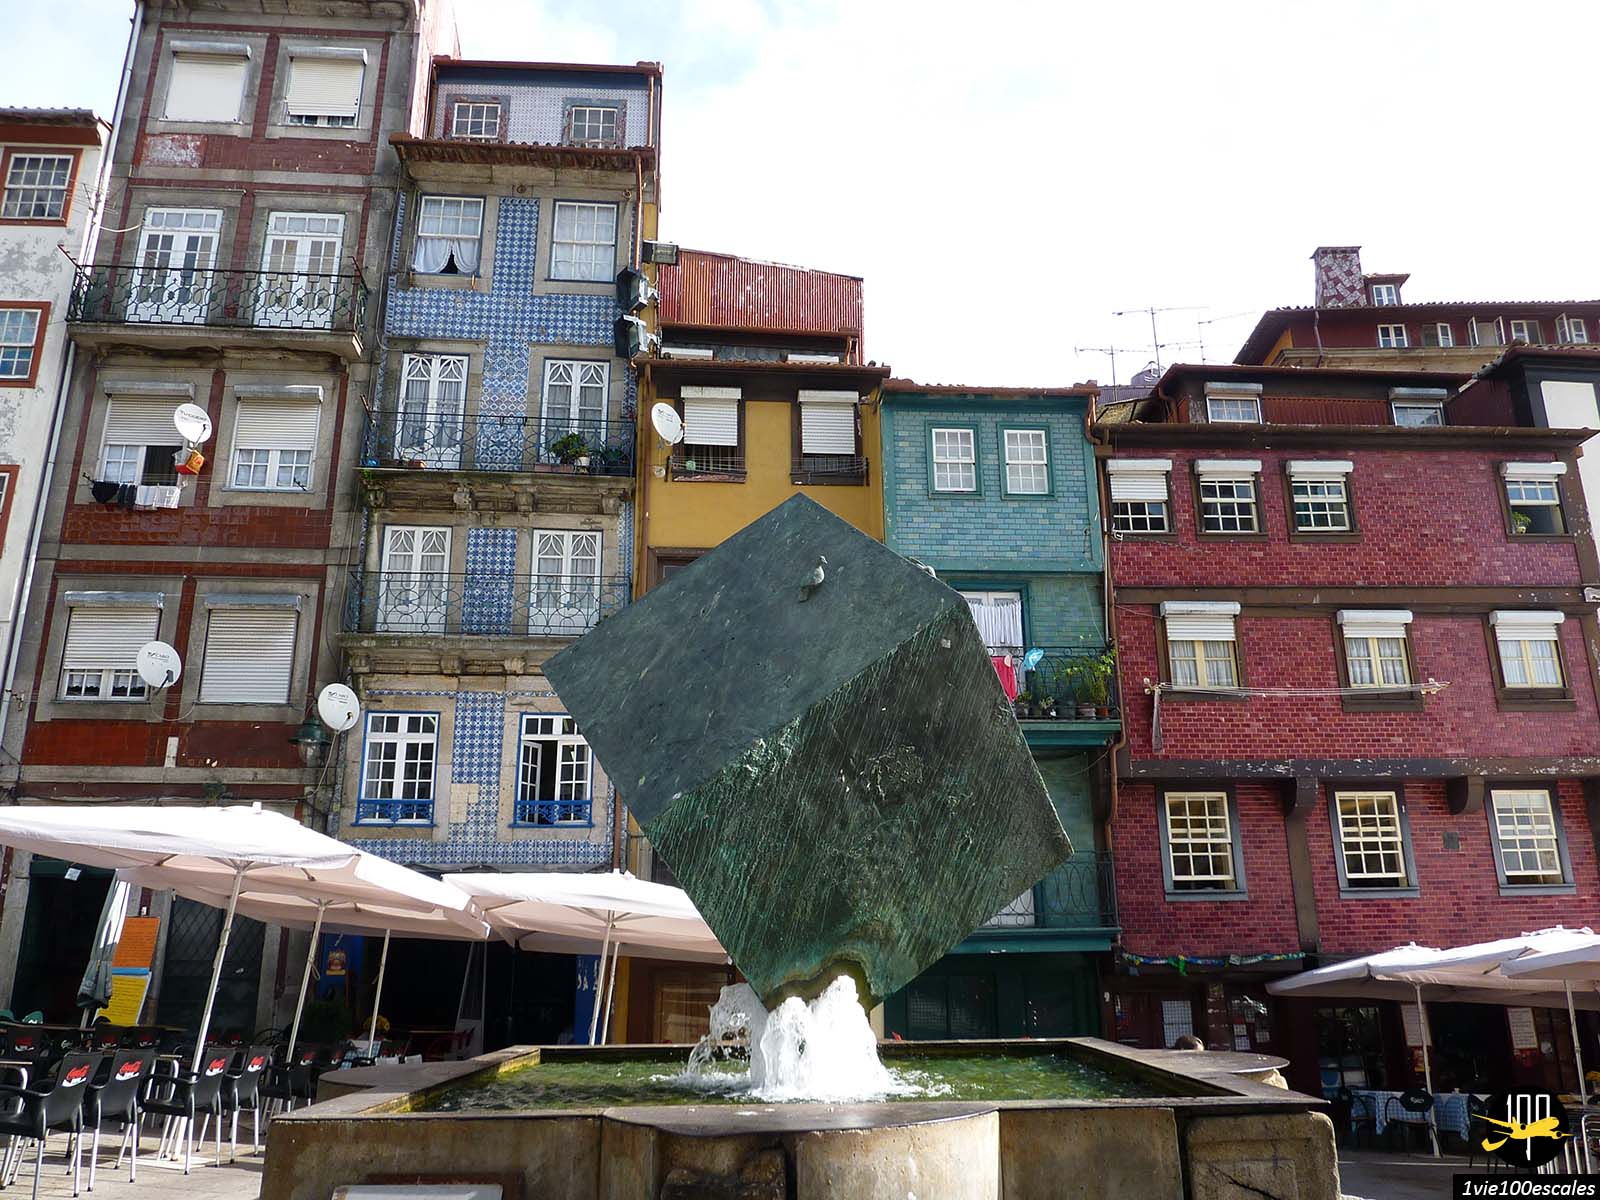 La Praça da Ribeira est une petite place du quartier de Ribeira, au bord du Douro, dans le centre historique de Porto